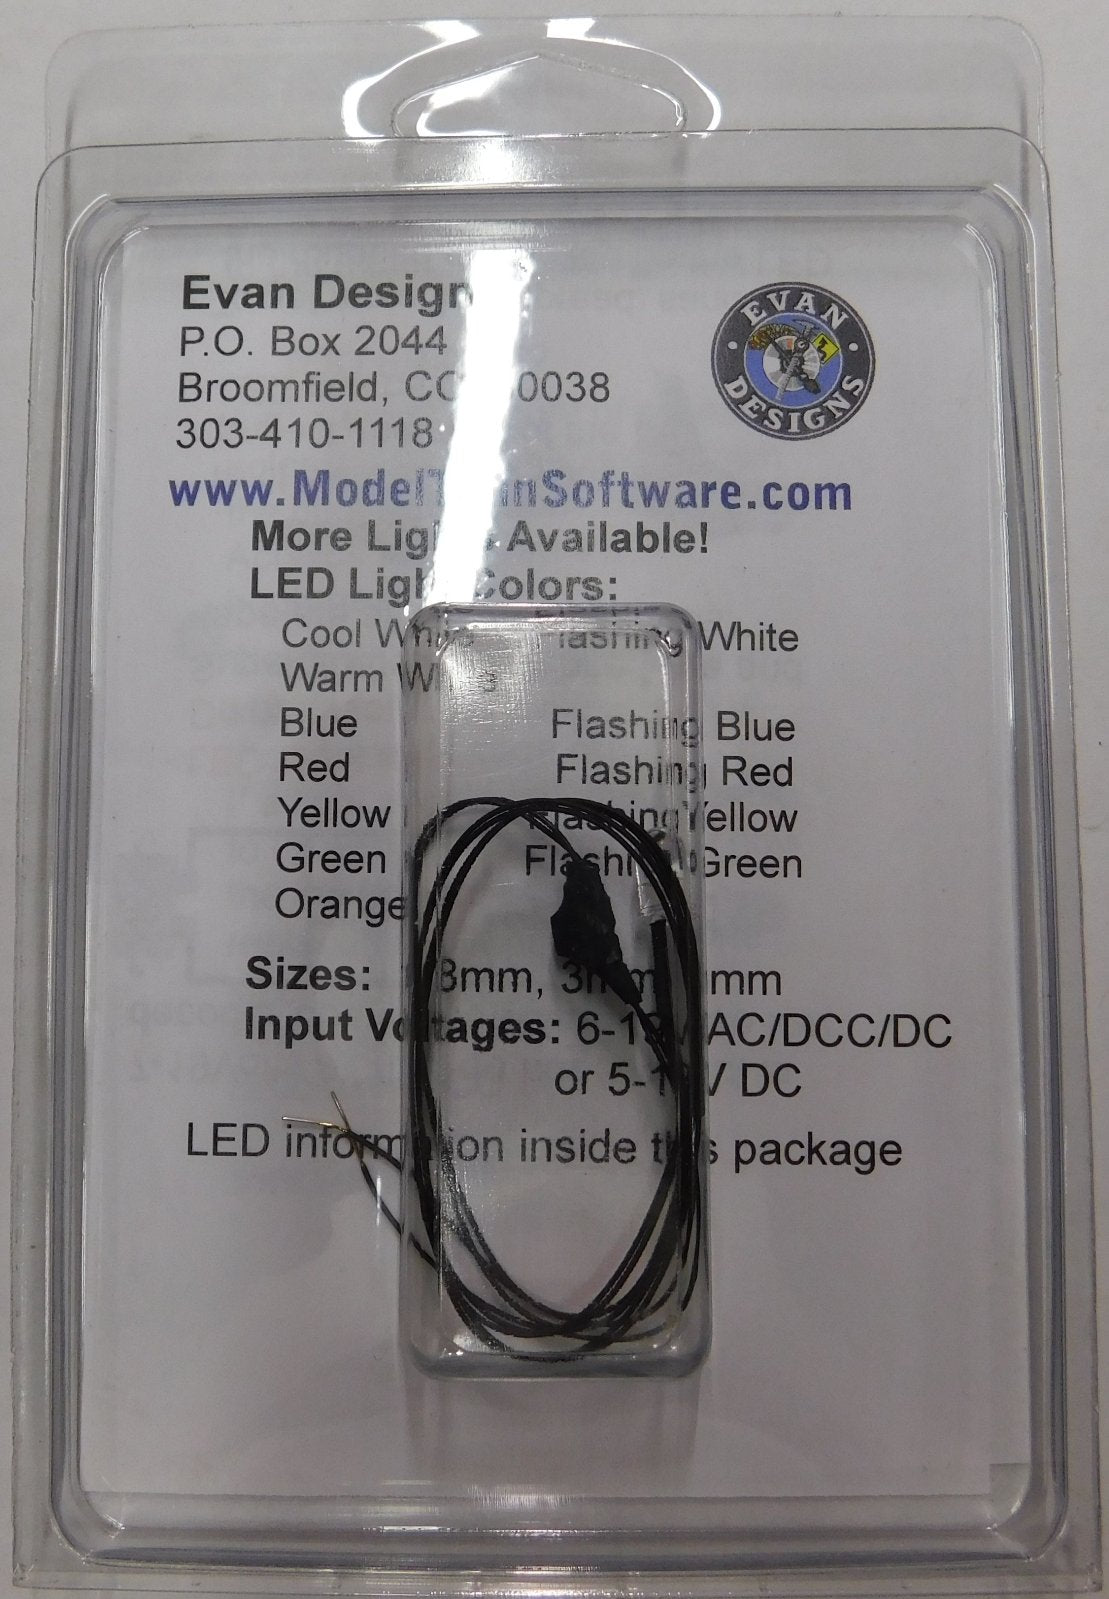 Evan Designs U5TW Universal 5mm Slow White Flash